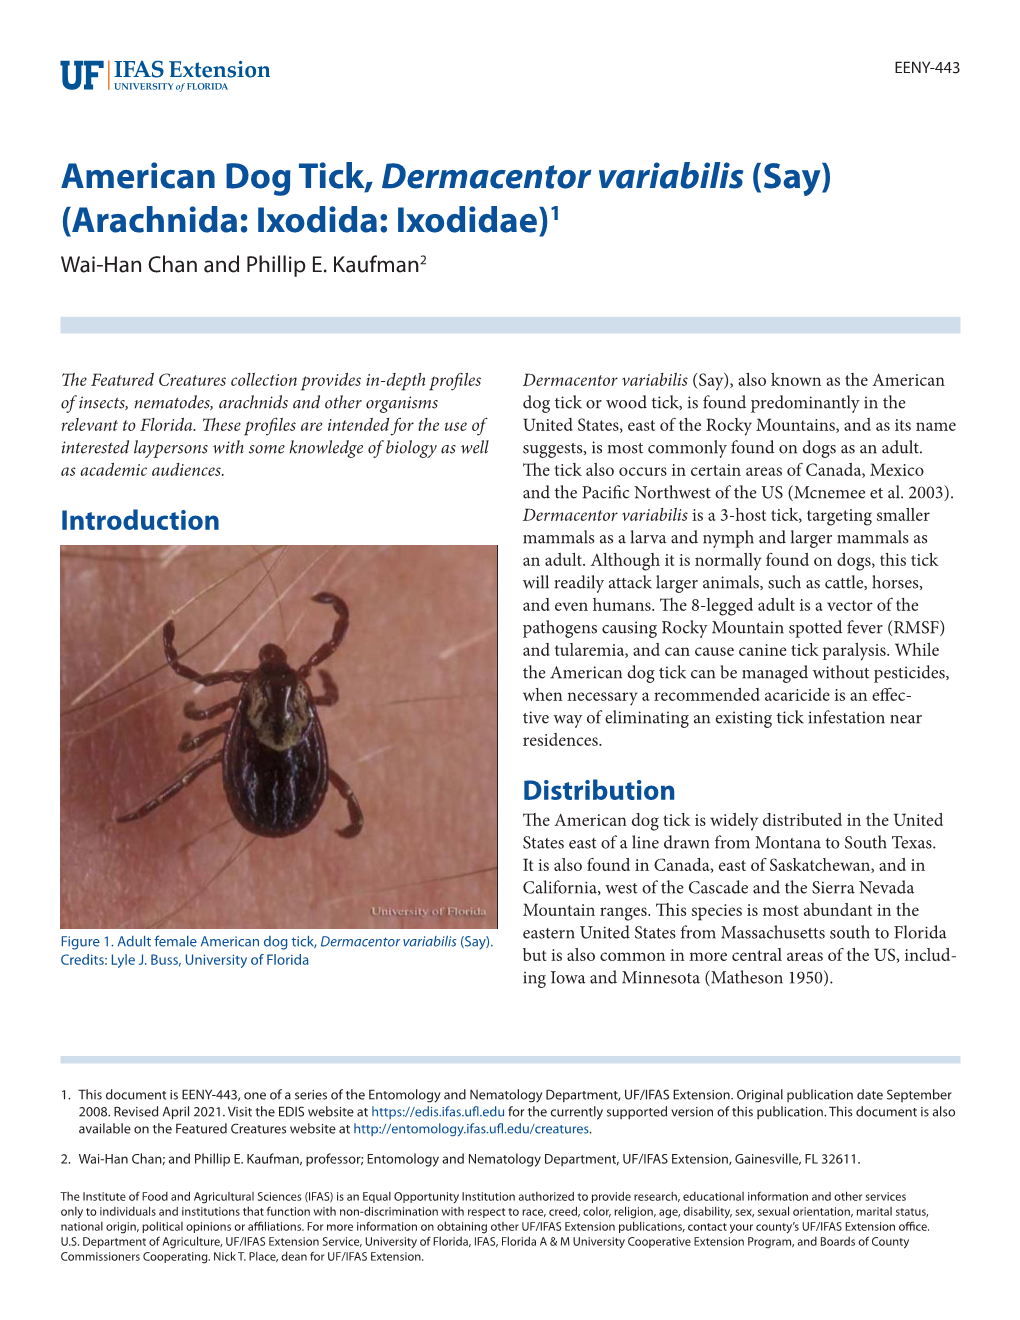 American Dog Tick, Dermacentor Variabilis (Say) (Arachnida: Ixodida: Ixodidae)1 Wai-Han Chan and Phillip E